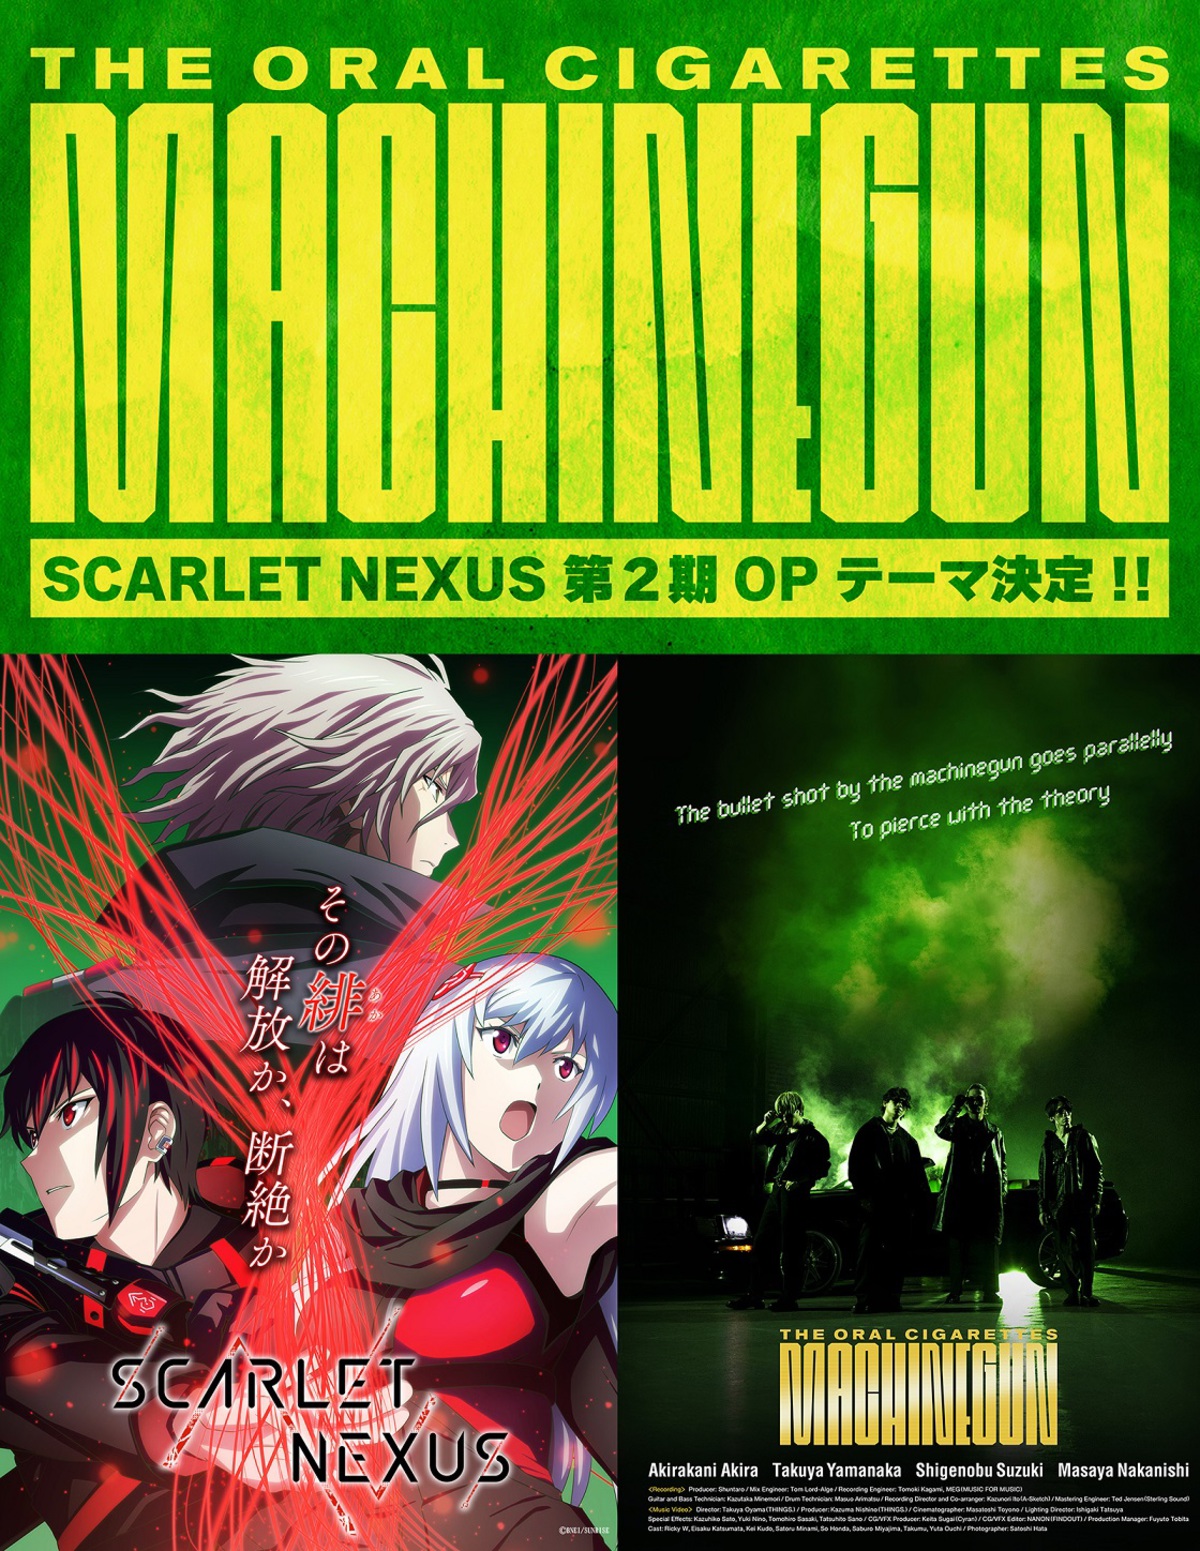 The Oral Cigarettes 10 13リリースの新曲 Machinegun がtvアニメ Scarlet Nexus 第2クールopテーマに決定 予告pv公開